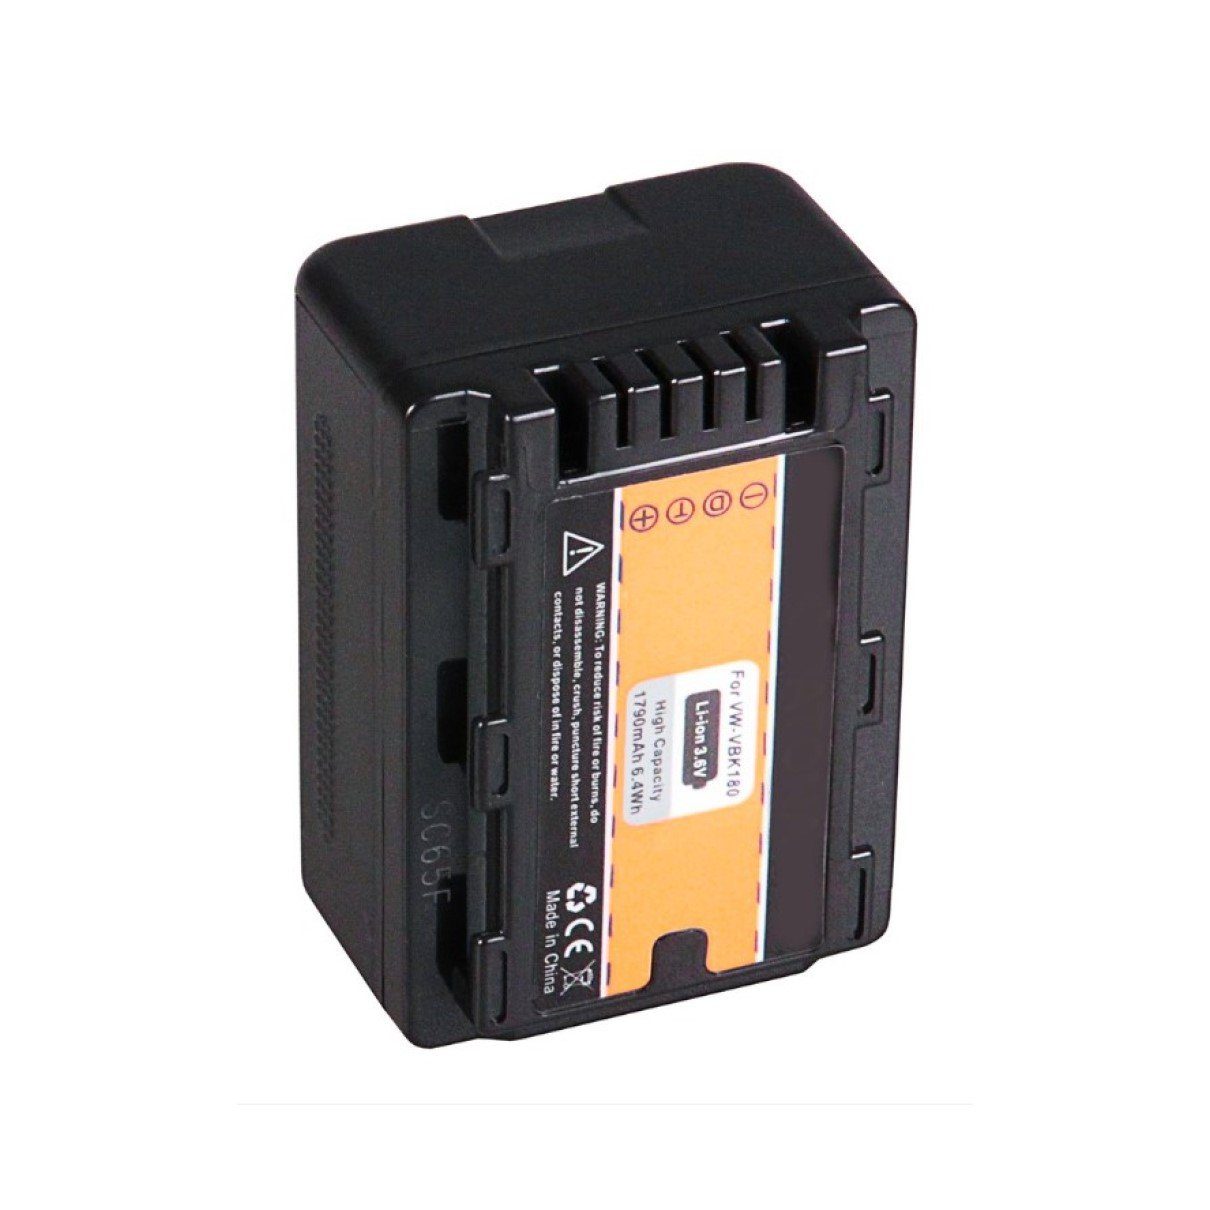 GOLDBATT Akku für Panasonic VW-VBK180 VBK180-K VBK180 HDC- HS60 SD40 SD80 + RESTLAUFANZEIGE Kamera-Akku Ersatzakku 1790 mAh (3,6 V, 1 St), 100% kompatibel mit den Original Akkus durch maßgefertigte Passform inklusive Überhitzungsschutz